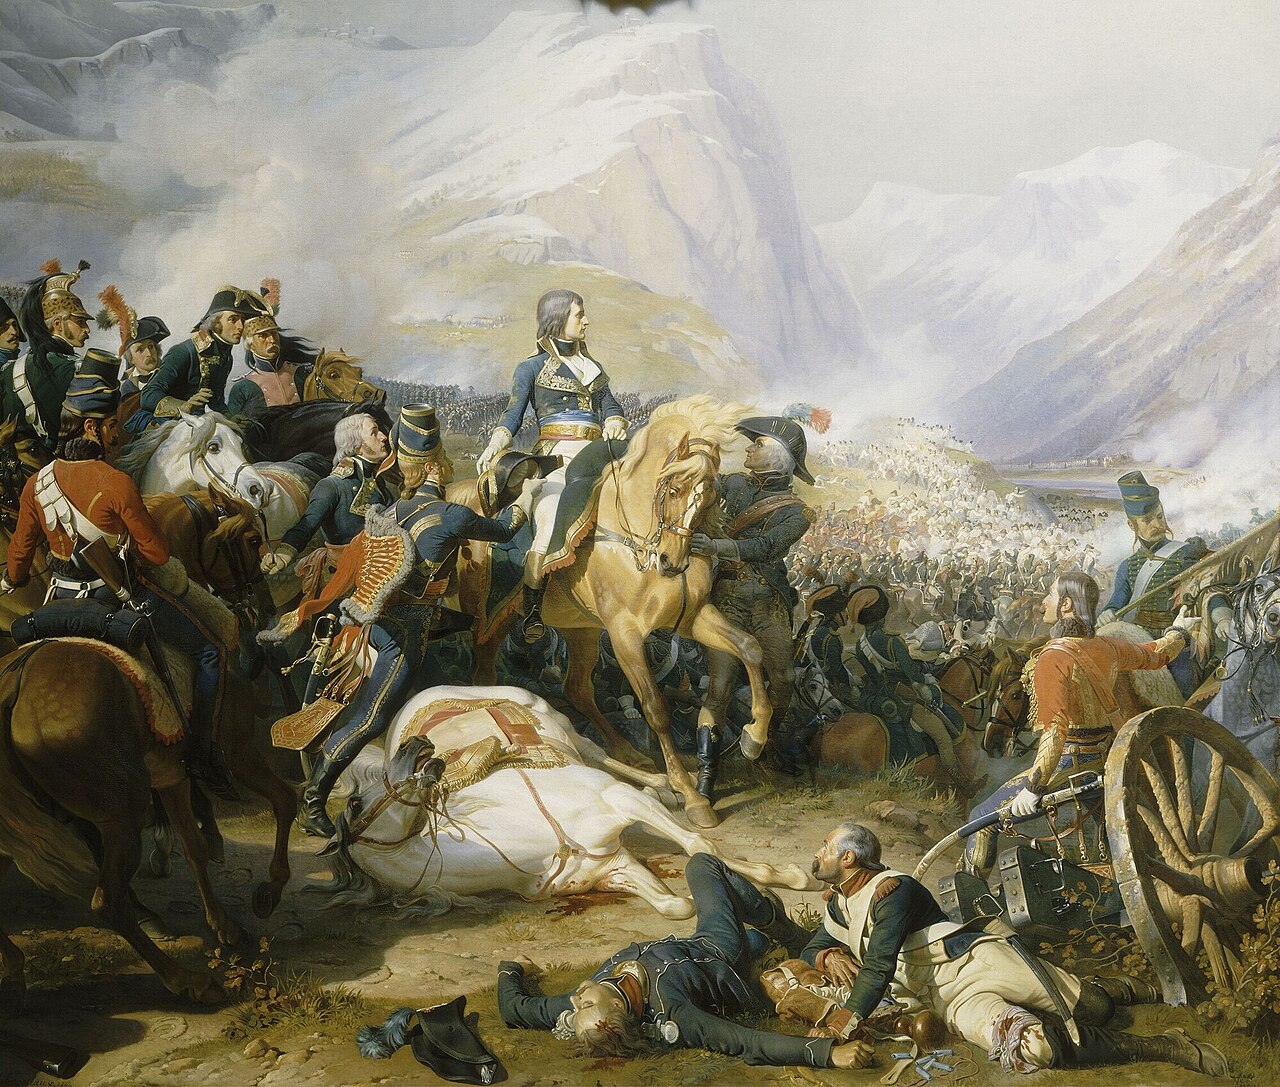 Napoleon invades Italy